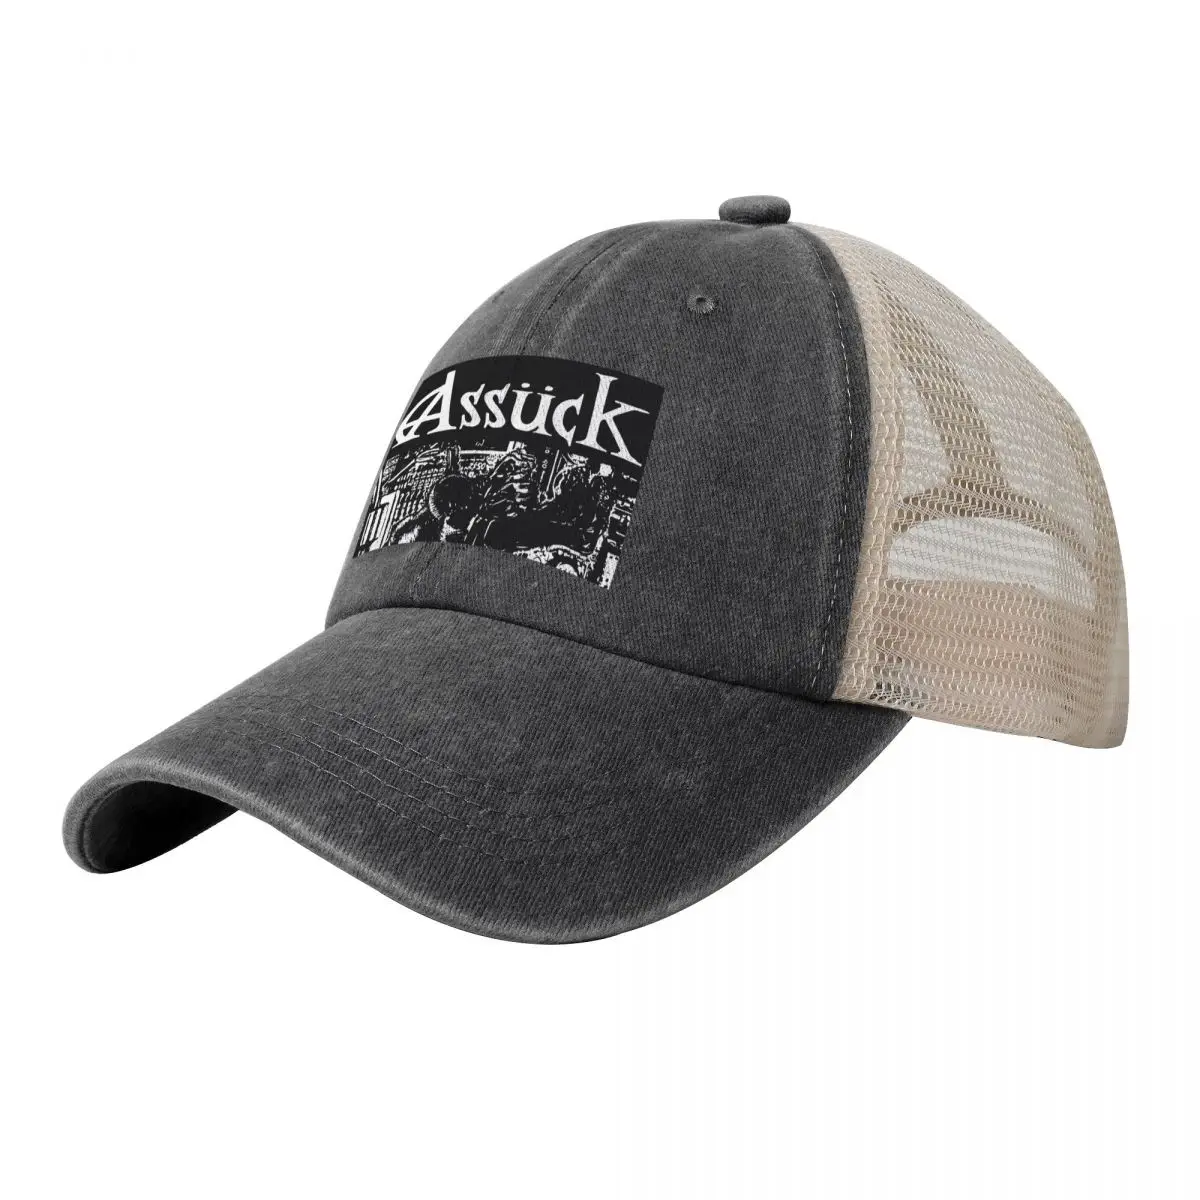 

Assuck Misery Index Album Cowboy Mesh Baseball Cap Rugby Uv Protection Solar Hat Hat Baseball Cap Trucker Hats For Men Women's